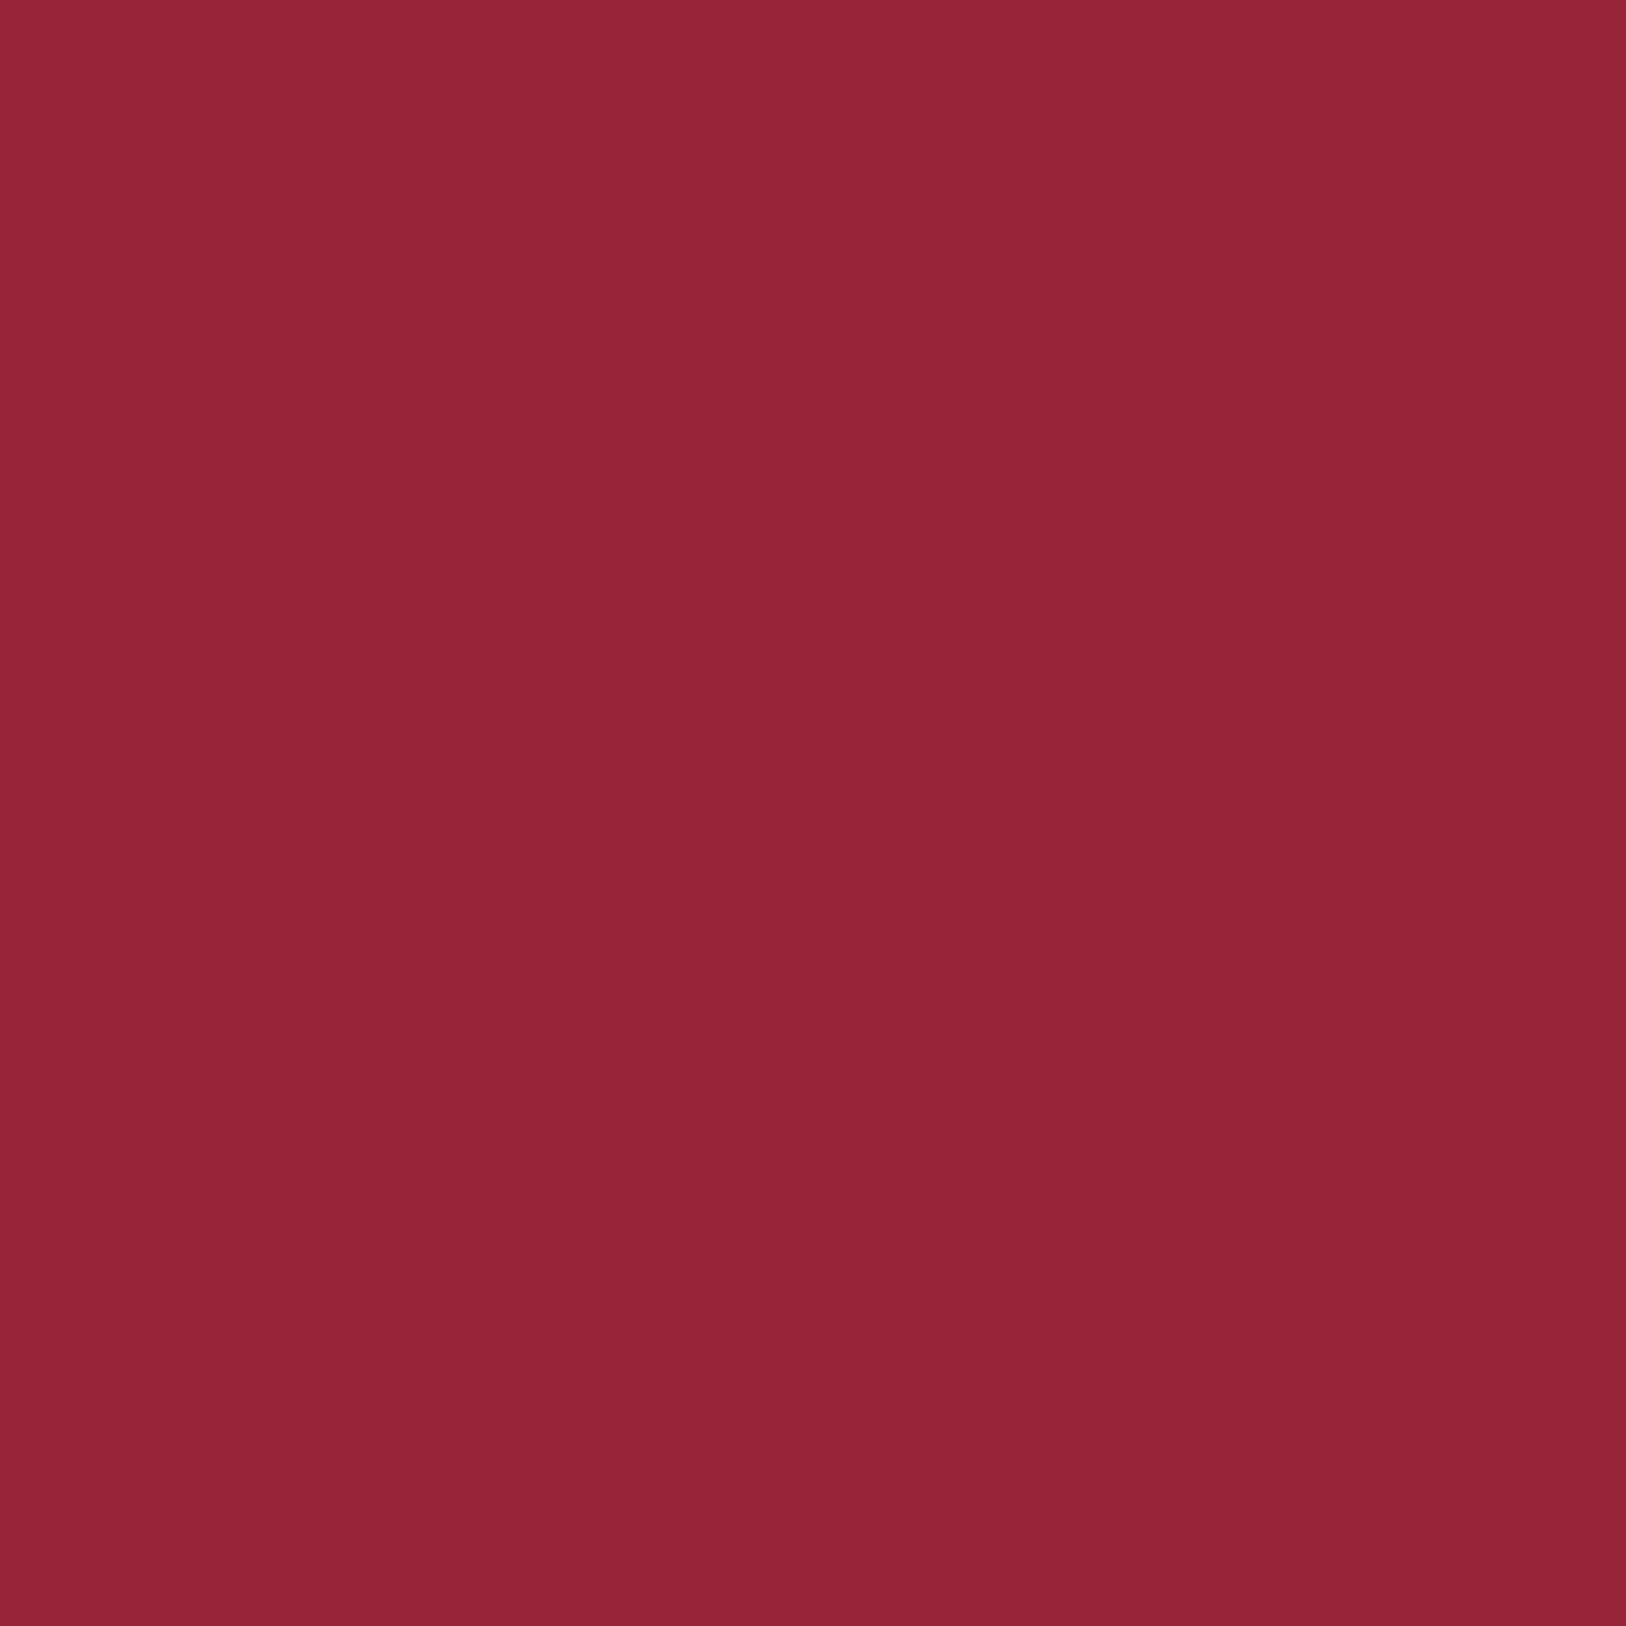 Plain Red Matte Background Background